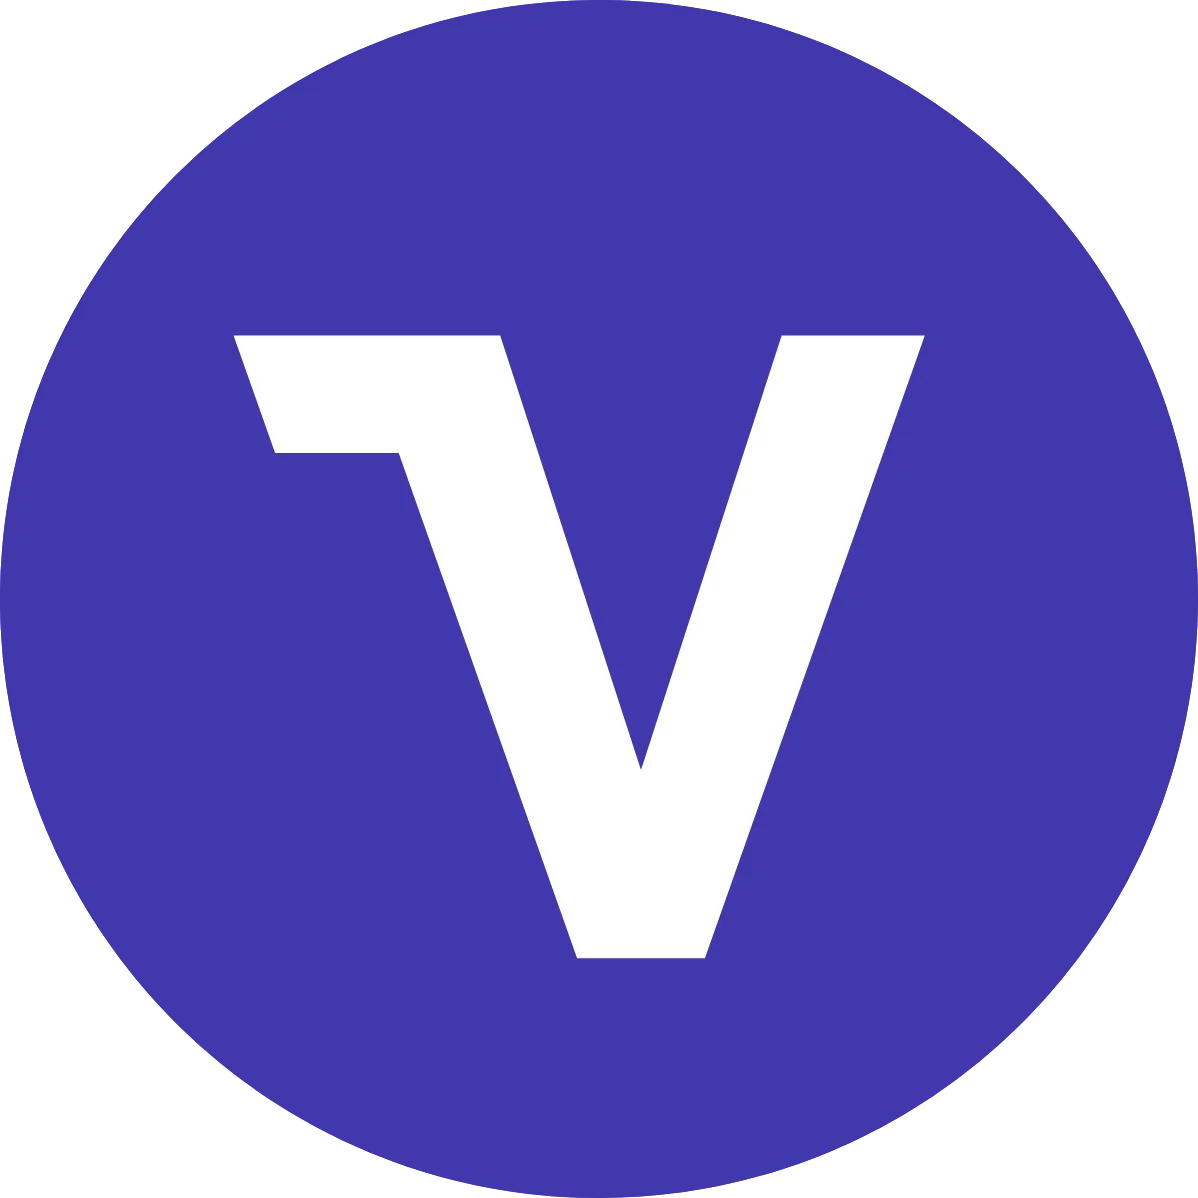 Vesper logo in svg format